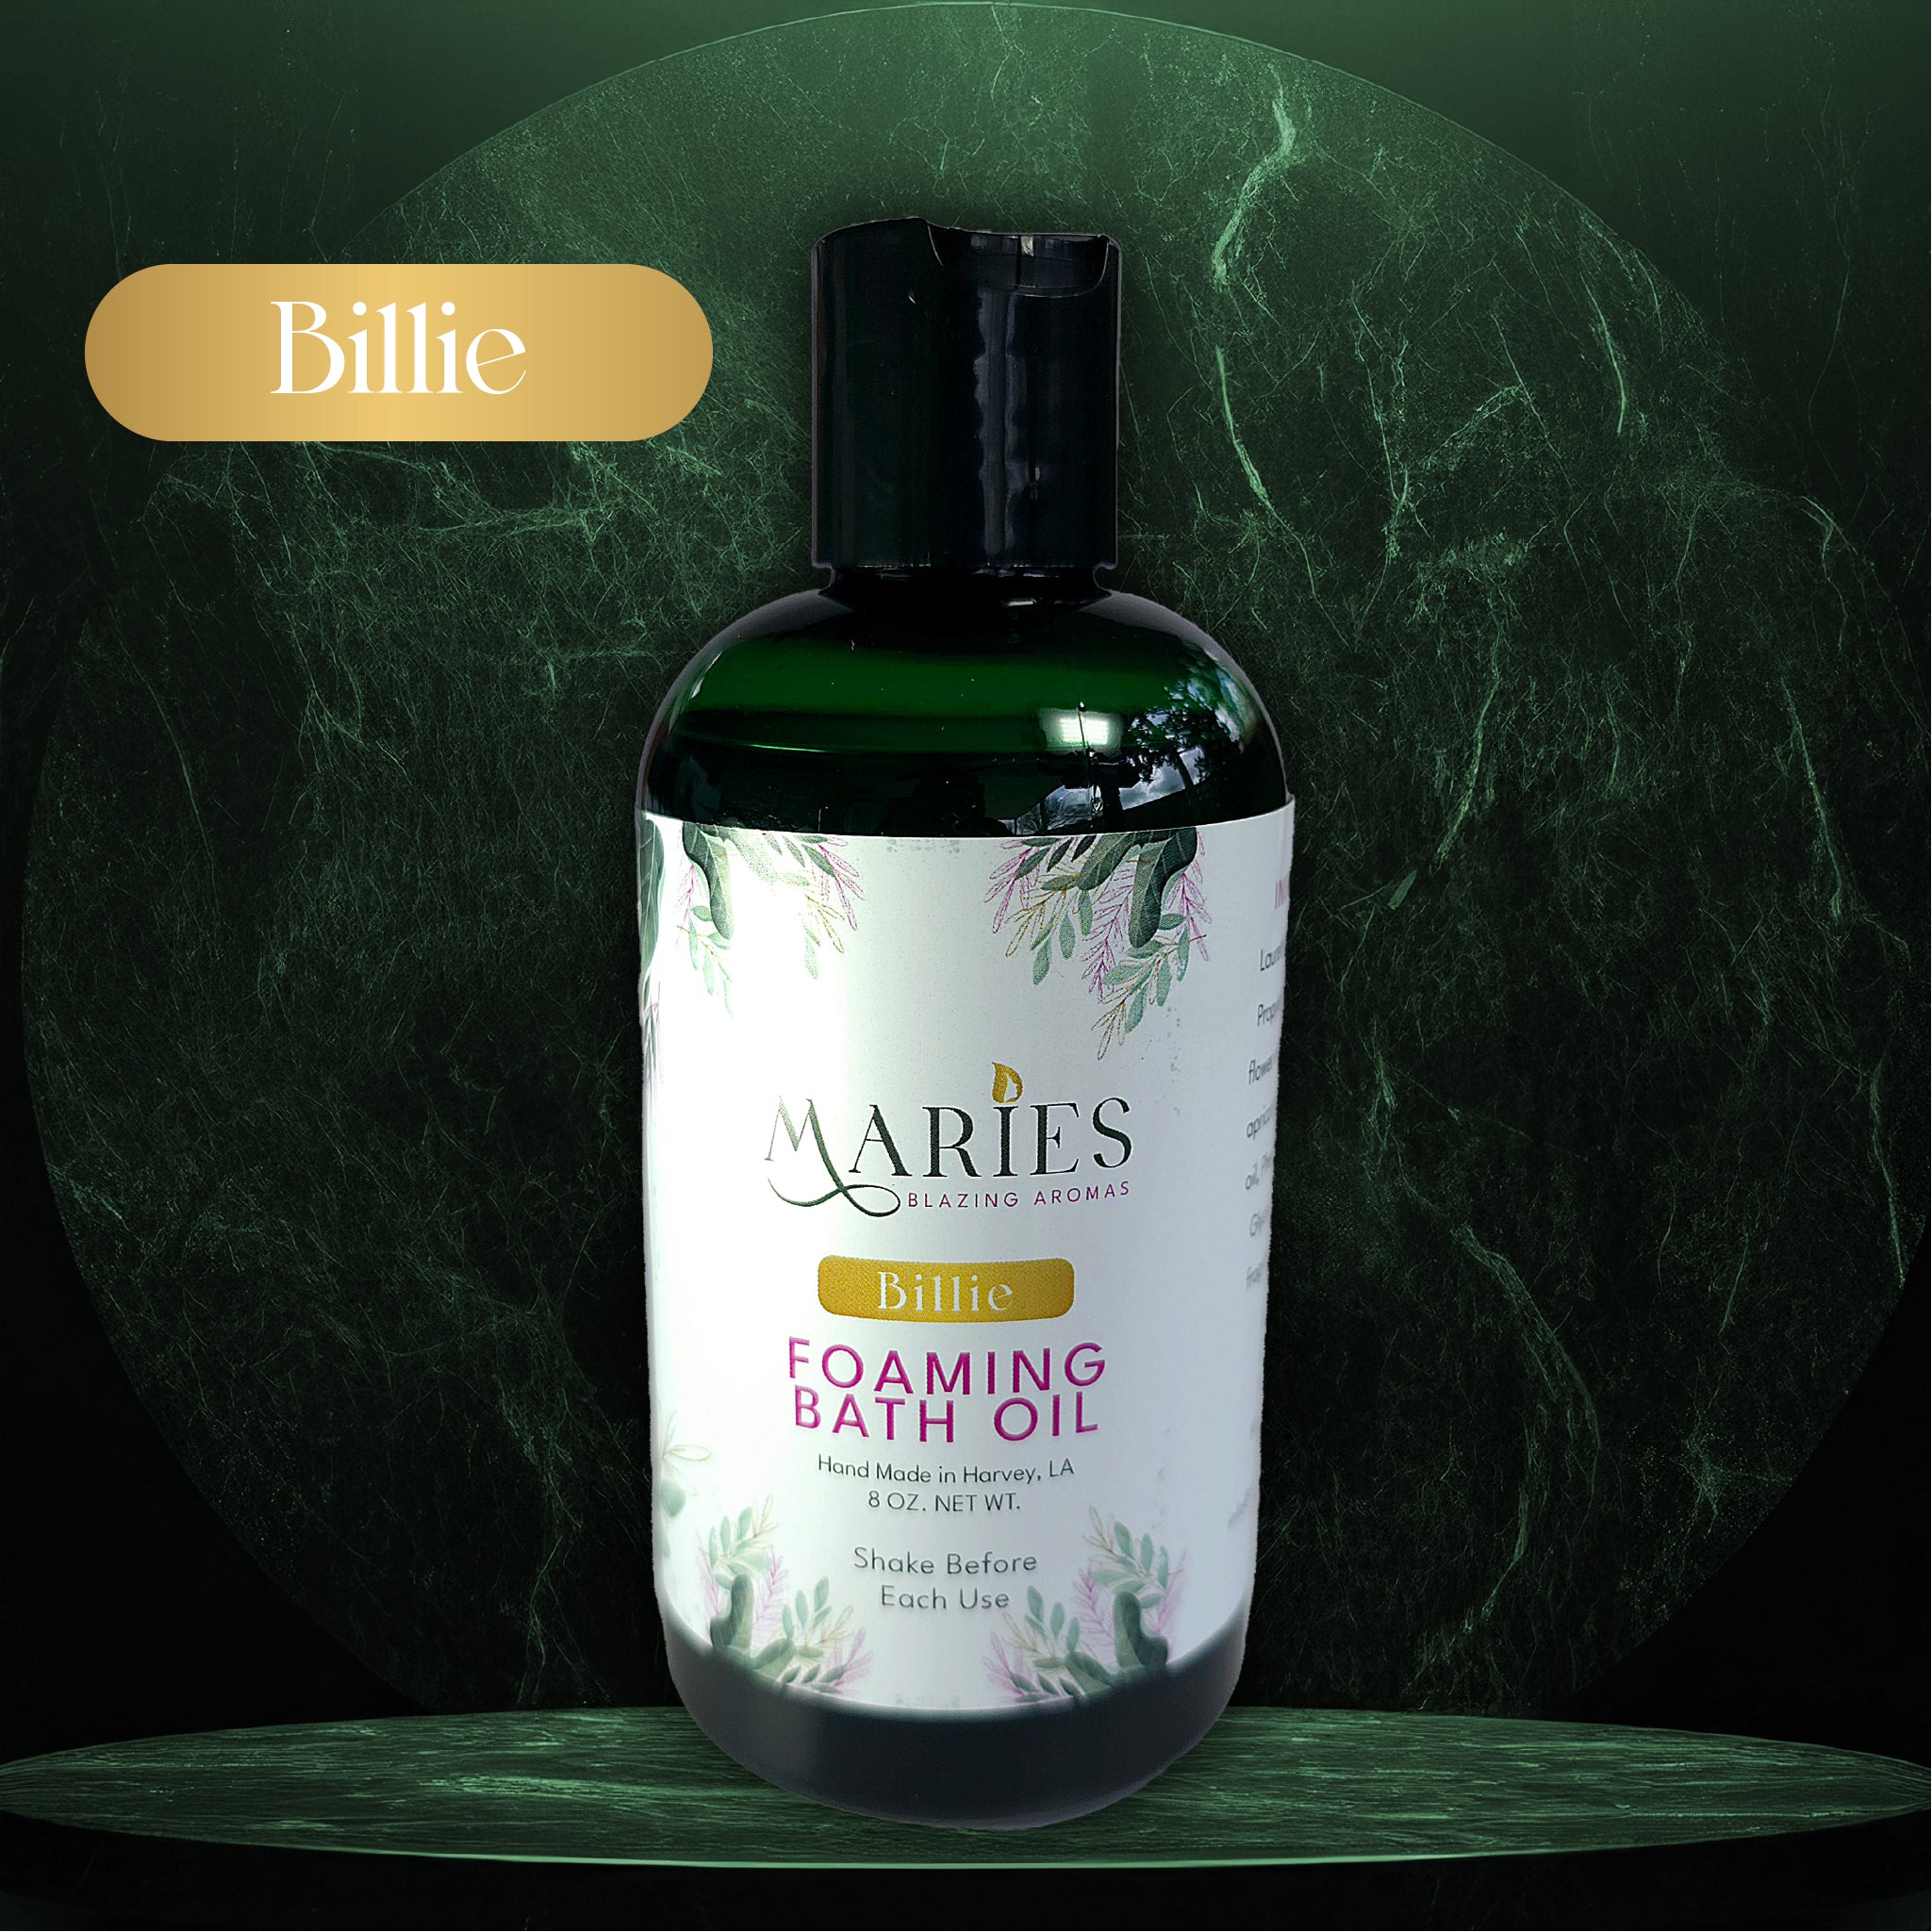 Billie Perfume Foaming Bath Oil - Luxurious bath oil for a fragrant bathing experience | Maries Blazing Aromas 